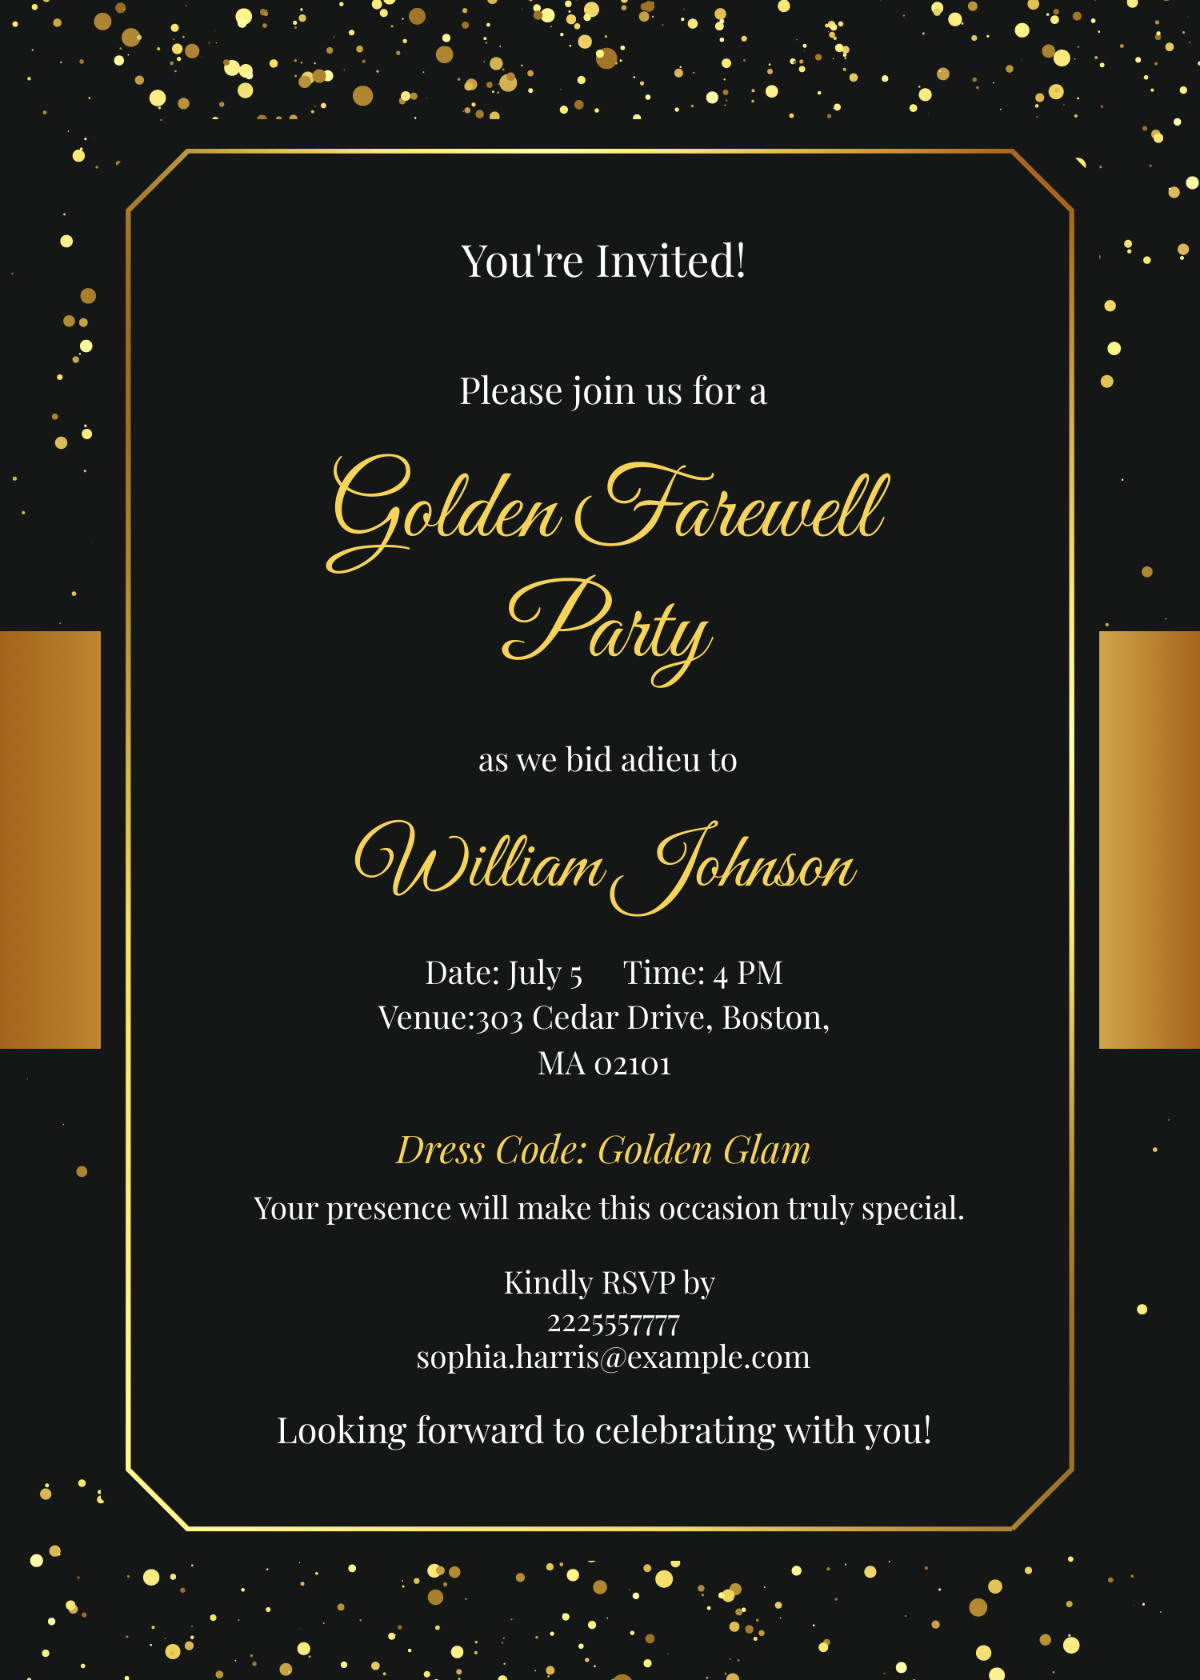 Golden Farewell Party Invitation